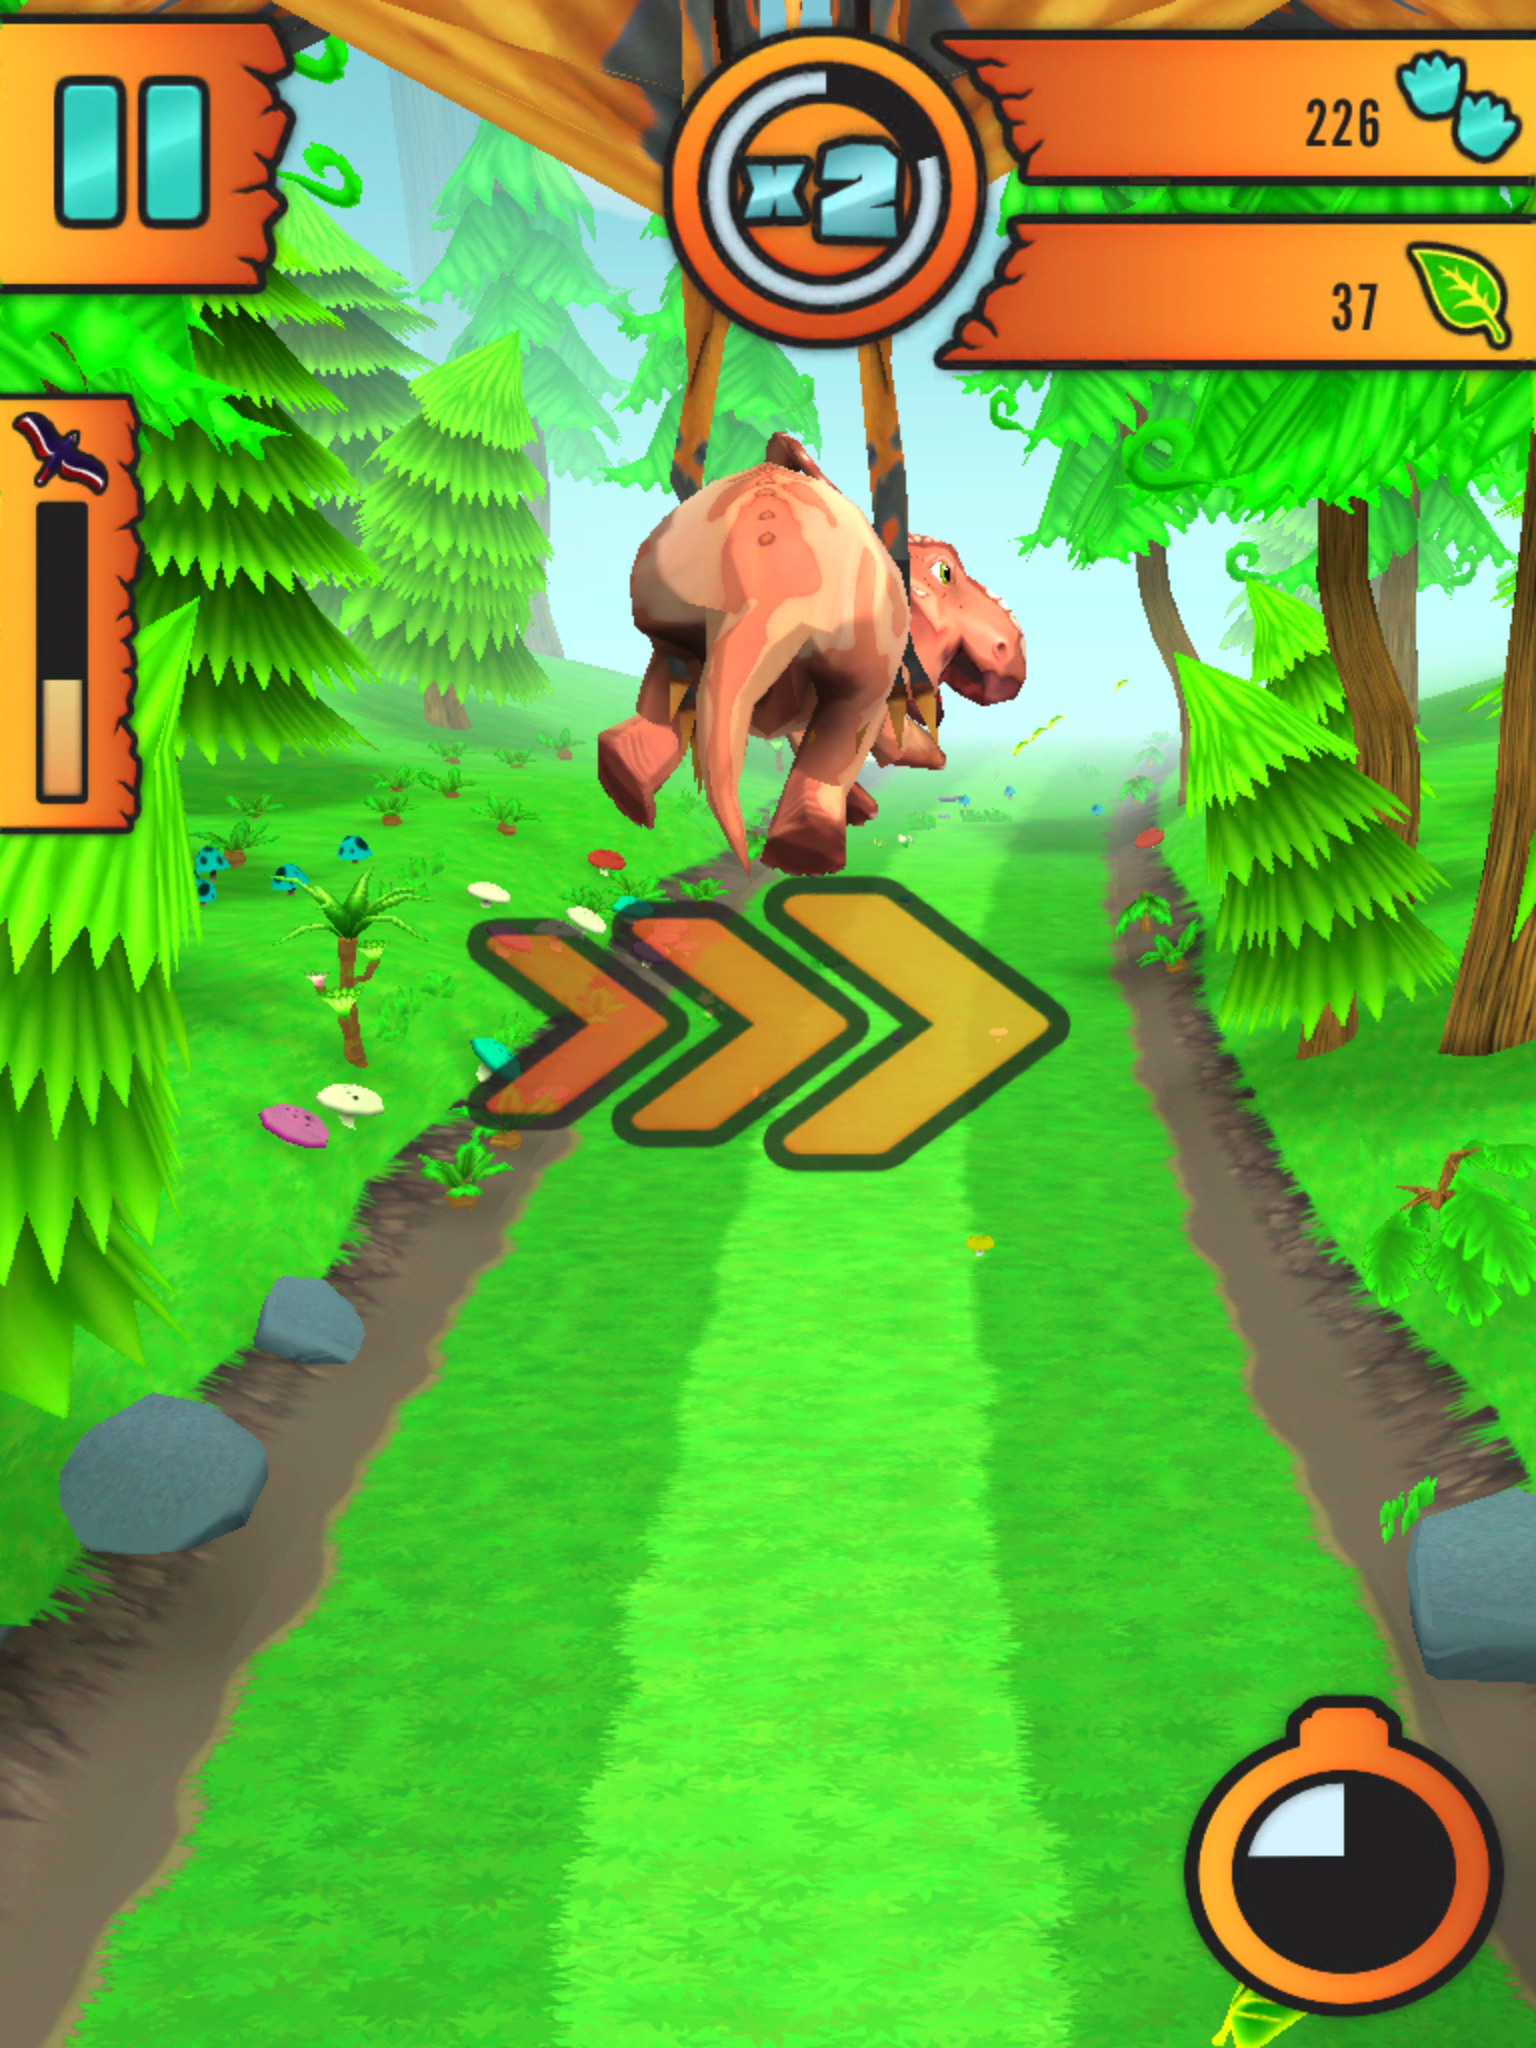 Promo image - Walking With Dinosaurs: Dino Run! - ModDB